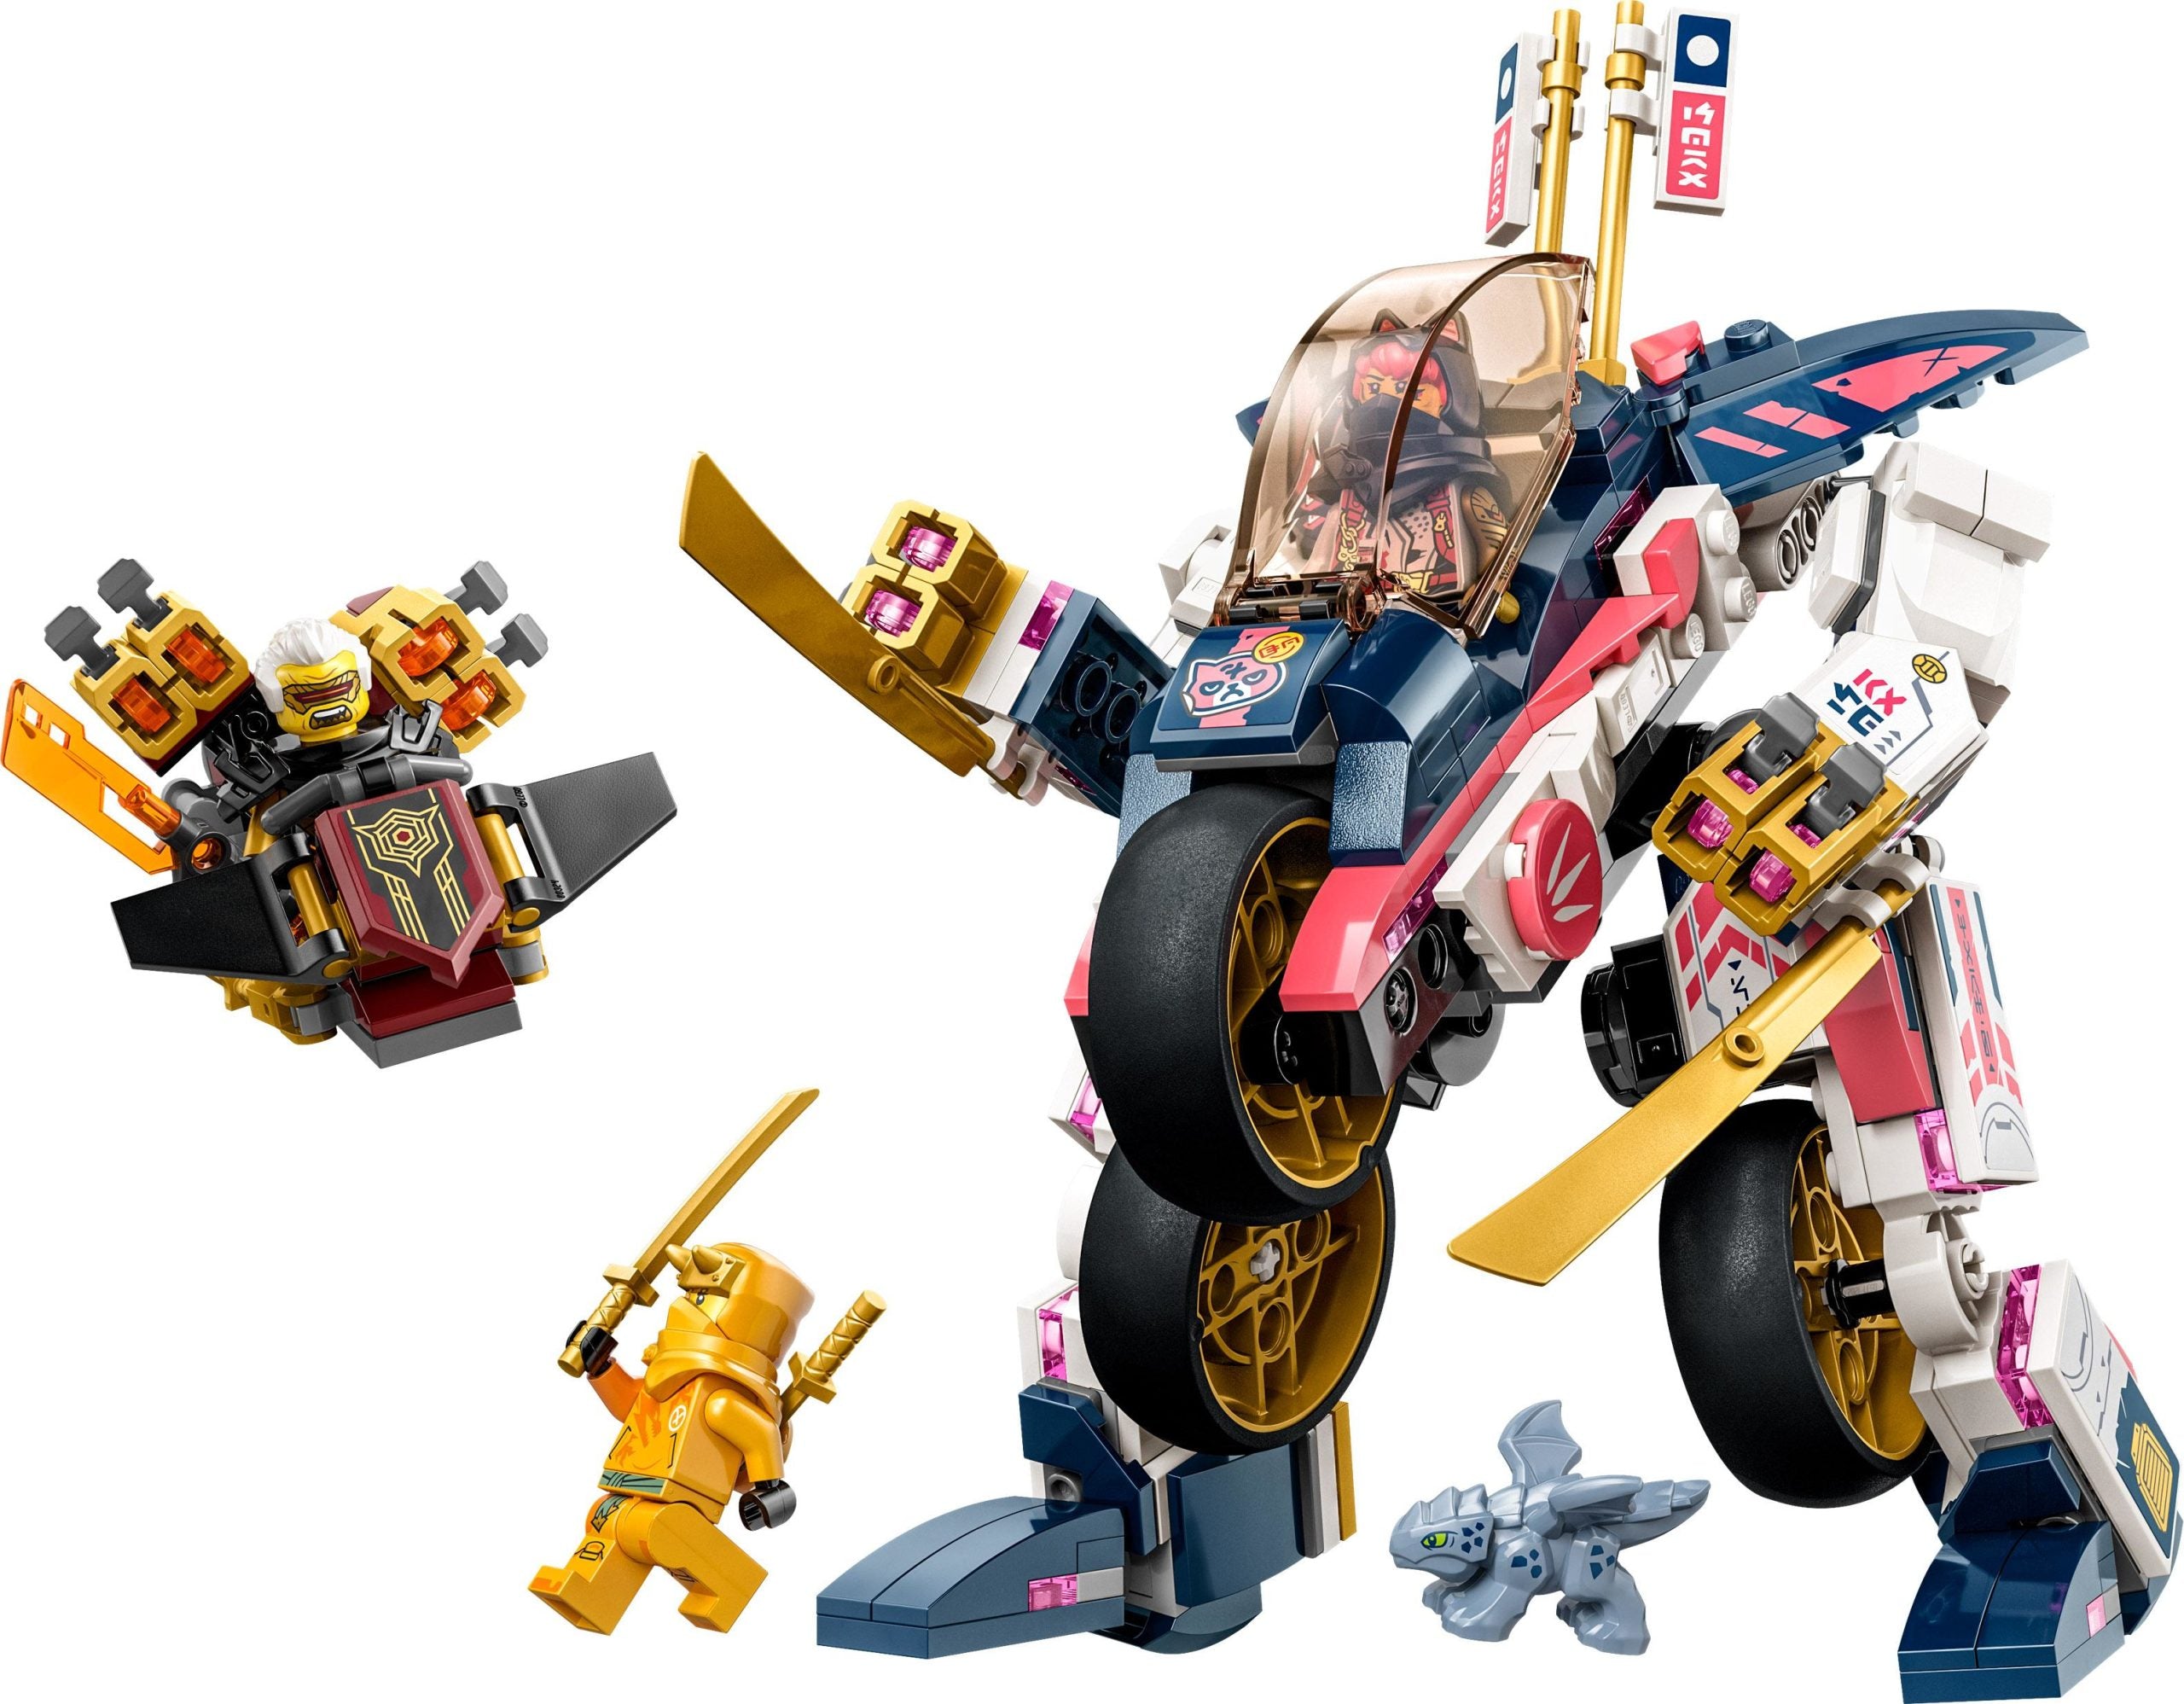 71792 - LEGO Ninjago - Moto-mech Transformer di Sora